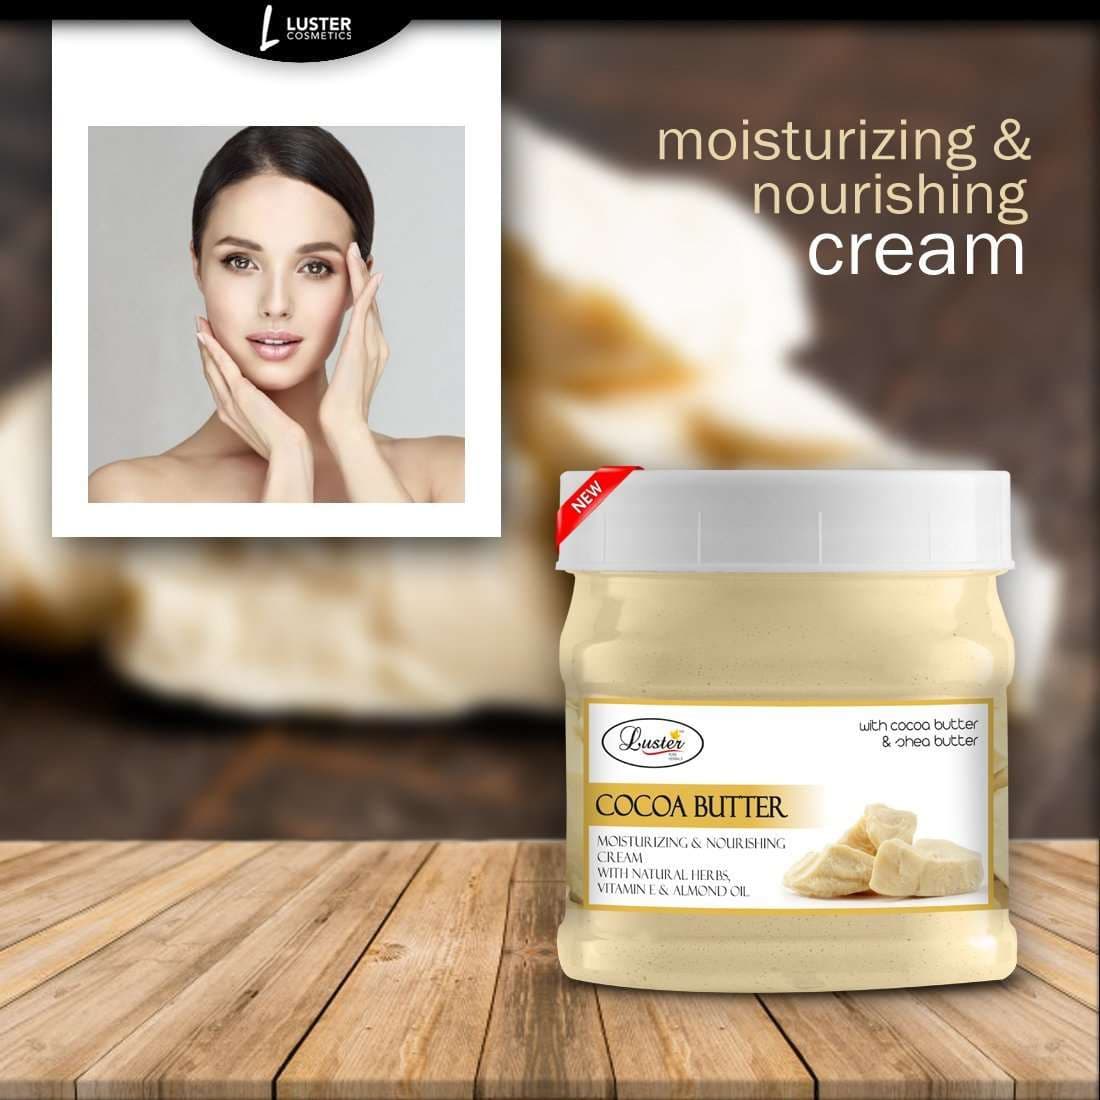 Luster Cocoa Butter Moisturizing & Nourishing Massage Cream (Paraben & Sulfate Free)-500ml - Luster Cosmetics